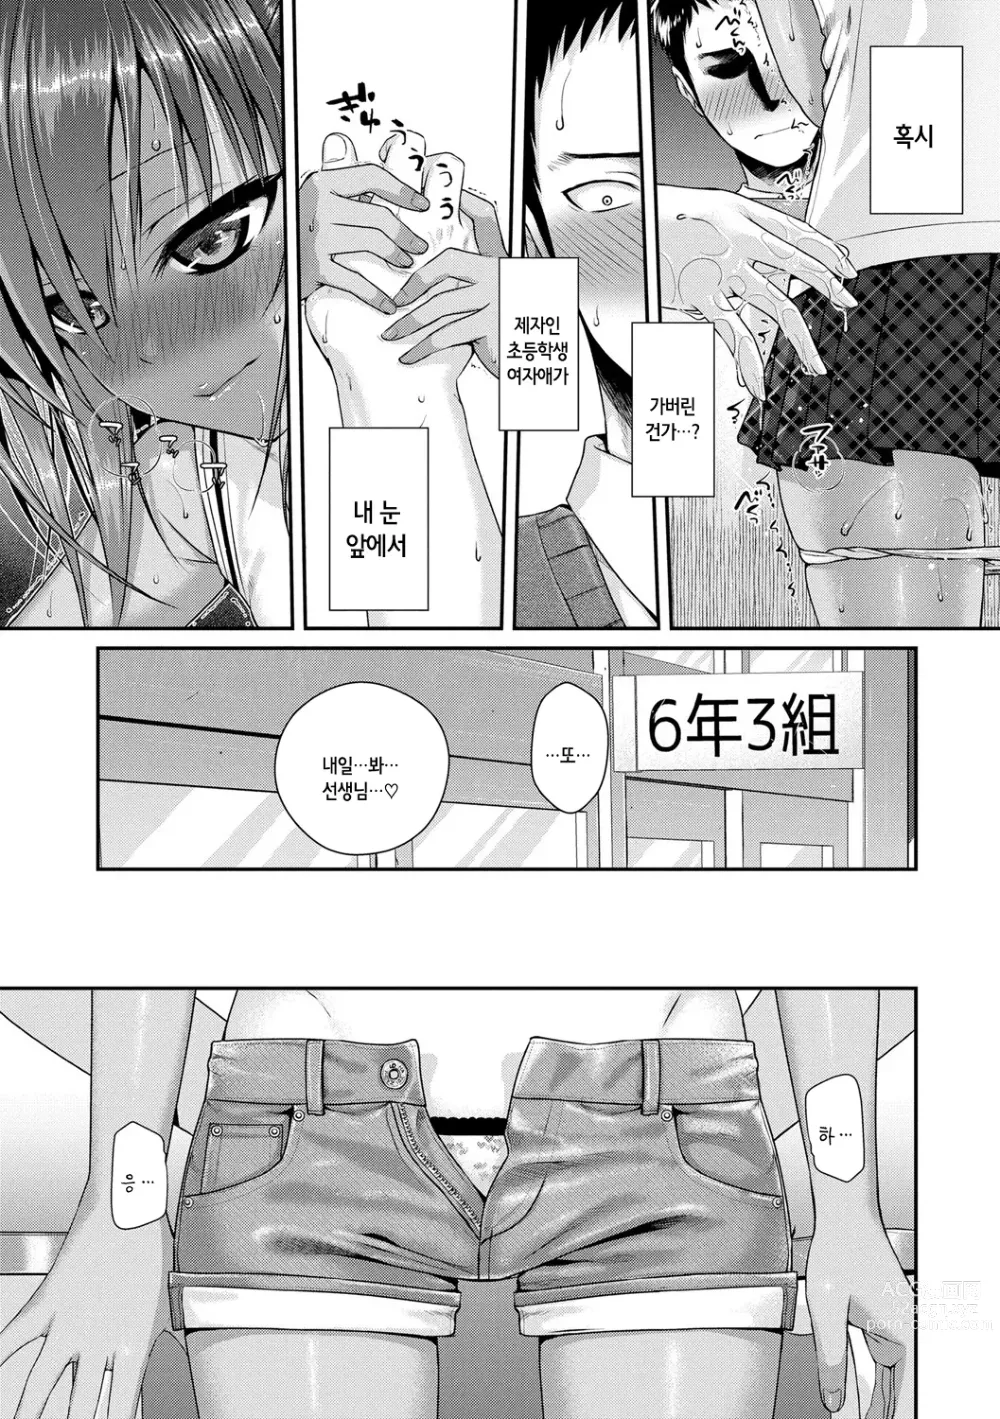 Page 23 of manga 프로토타입 로리타 + 토라노아나 구입 특전 4P 리플렛 휴일은 아저씨와 (decensored)